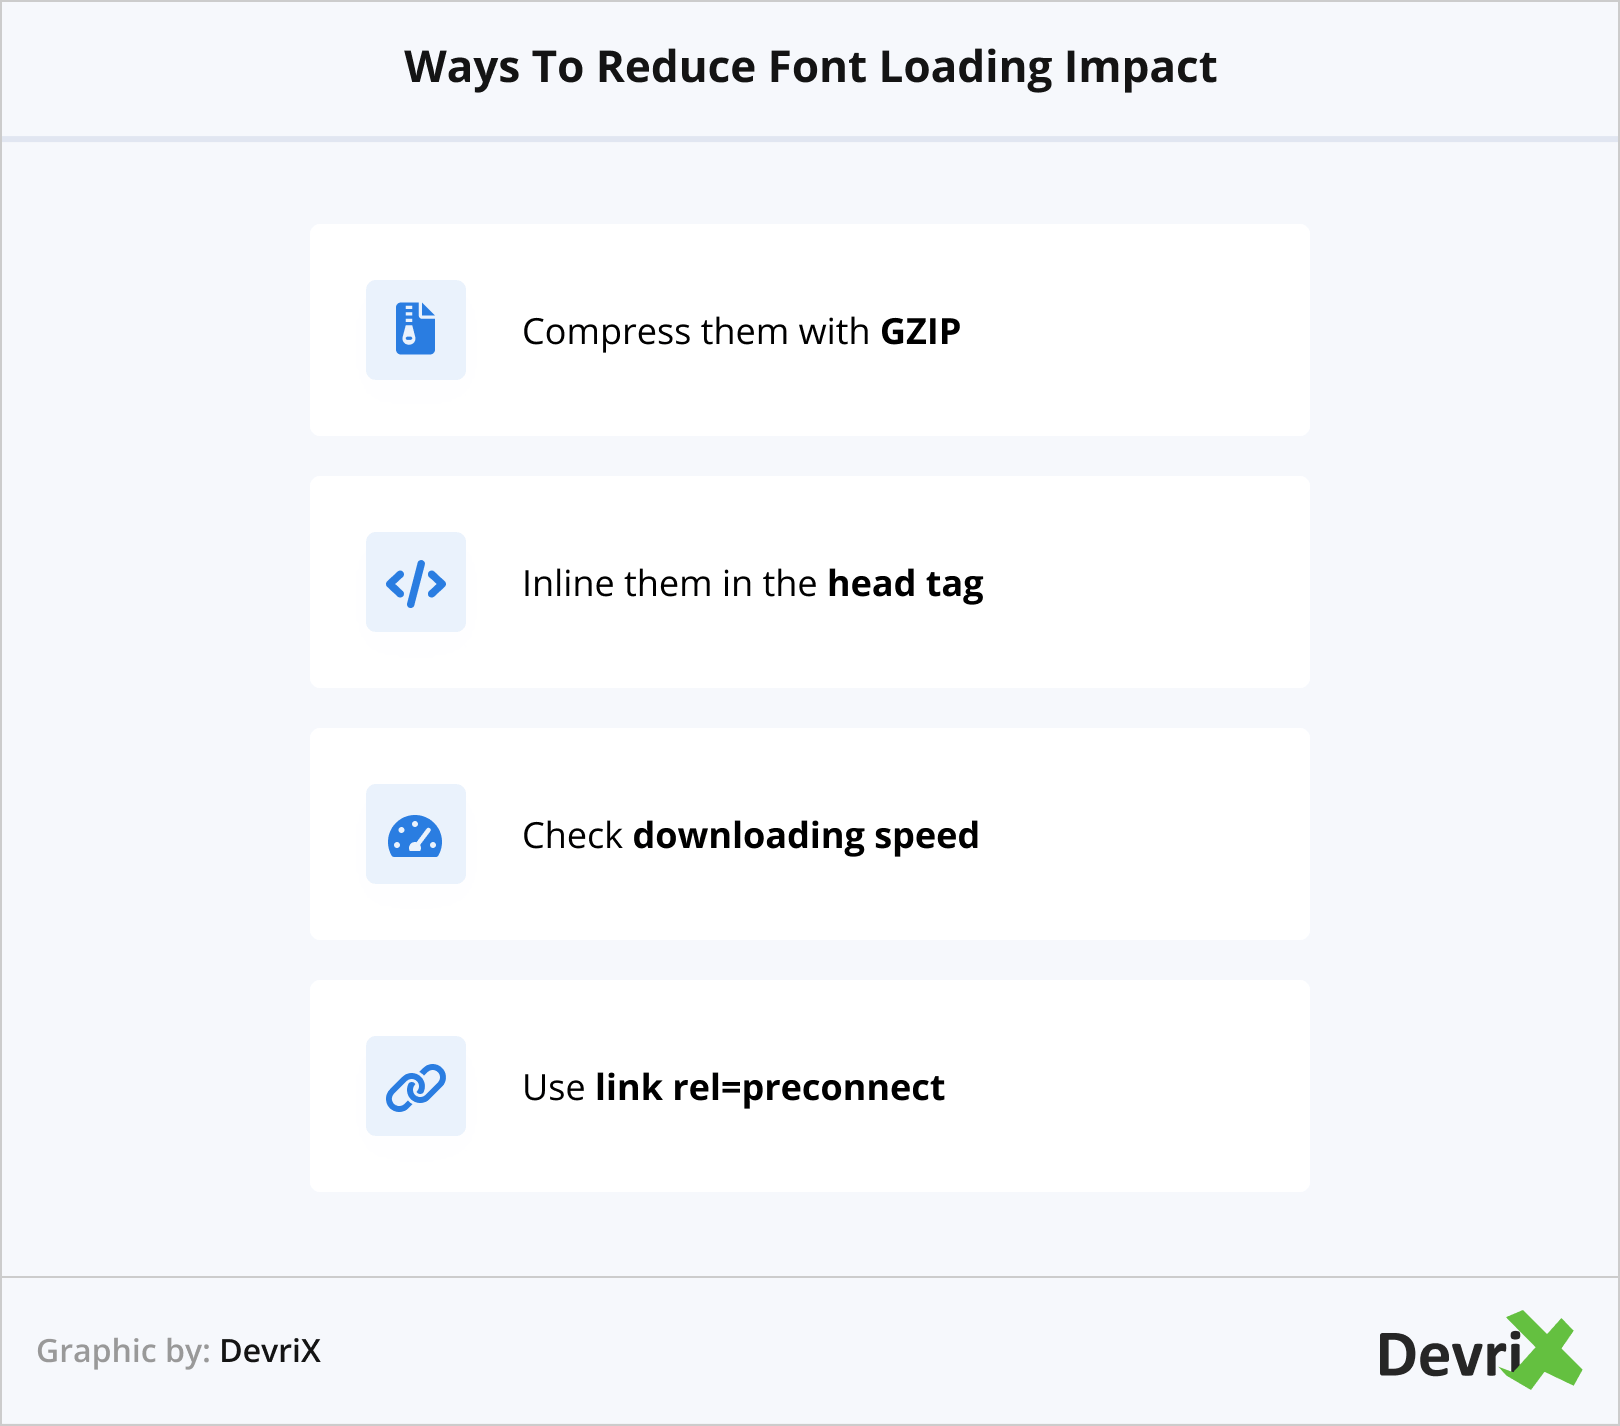 Ways To Reduce Font Loading Impact